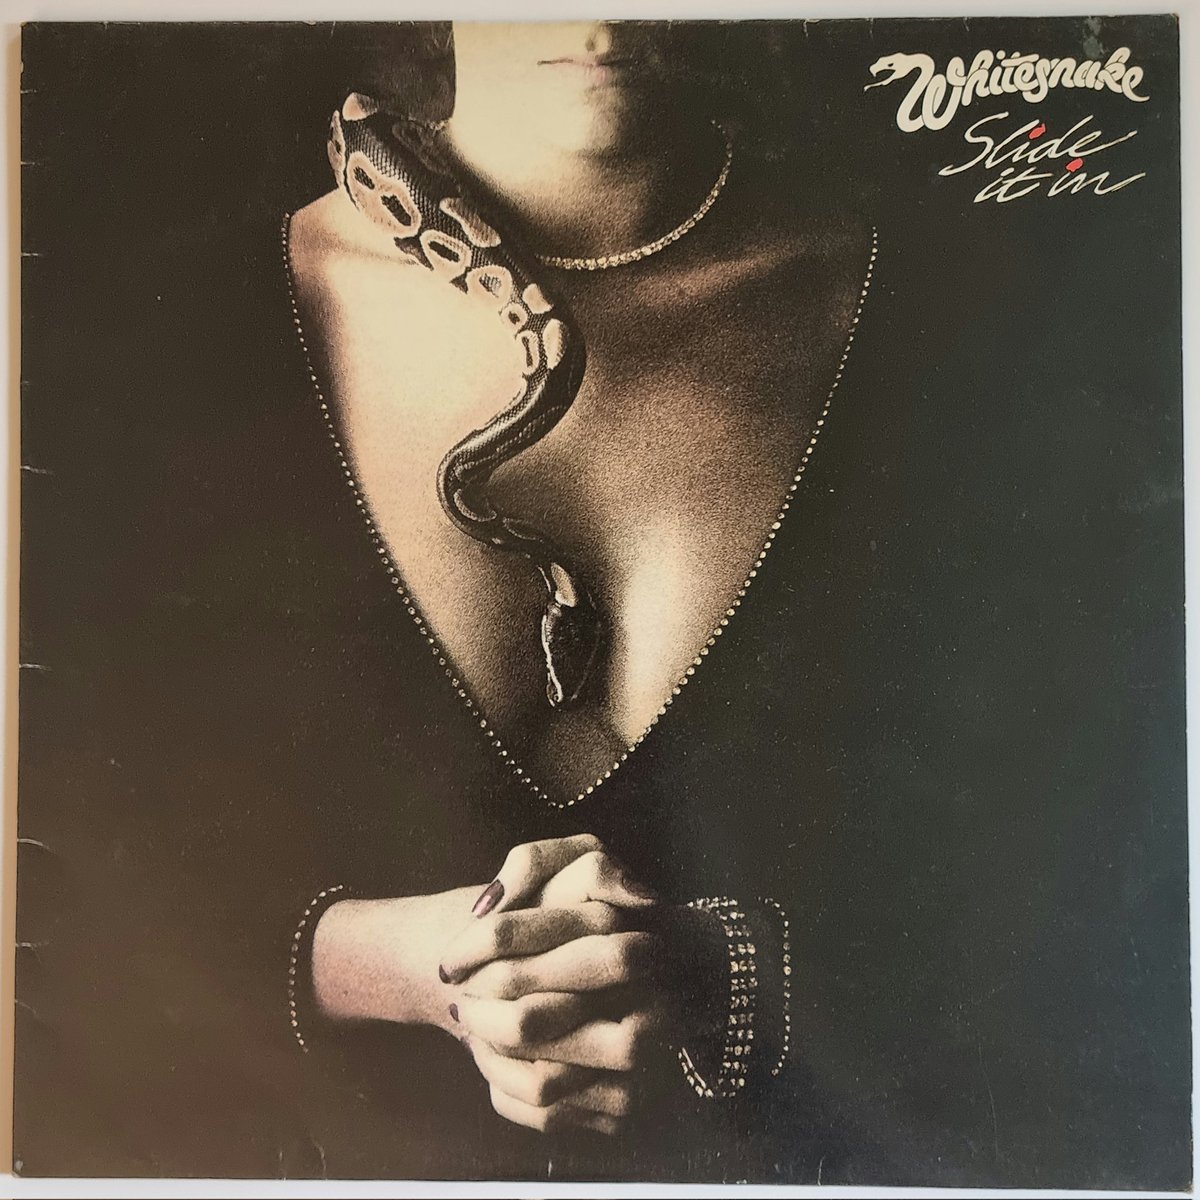 New on the eBay store tonight! 
#whitesnake #vinylcollection #vinylstore #recordstore #ebayseller